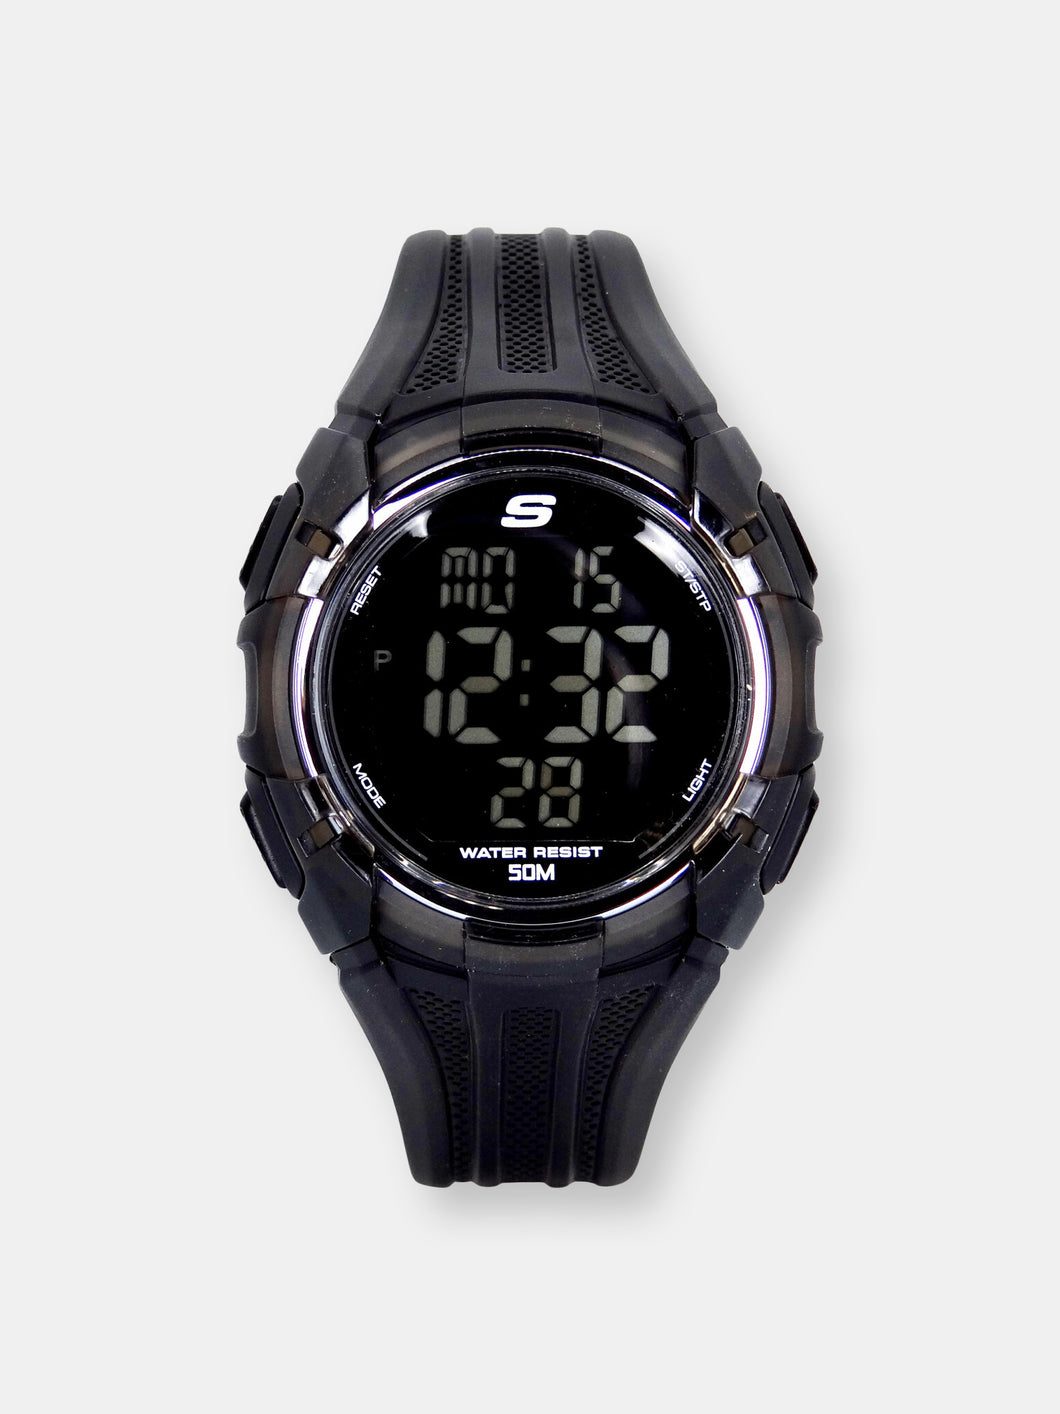 Skechers Watch SR1008 El Porto Sport Digital Display, 24 Hour Time, Back Light, Stopwatch, Alarm Black